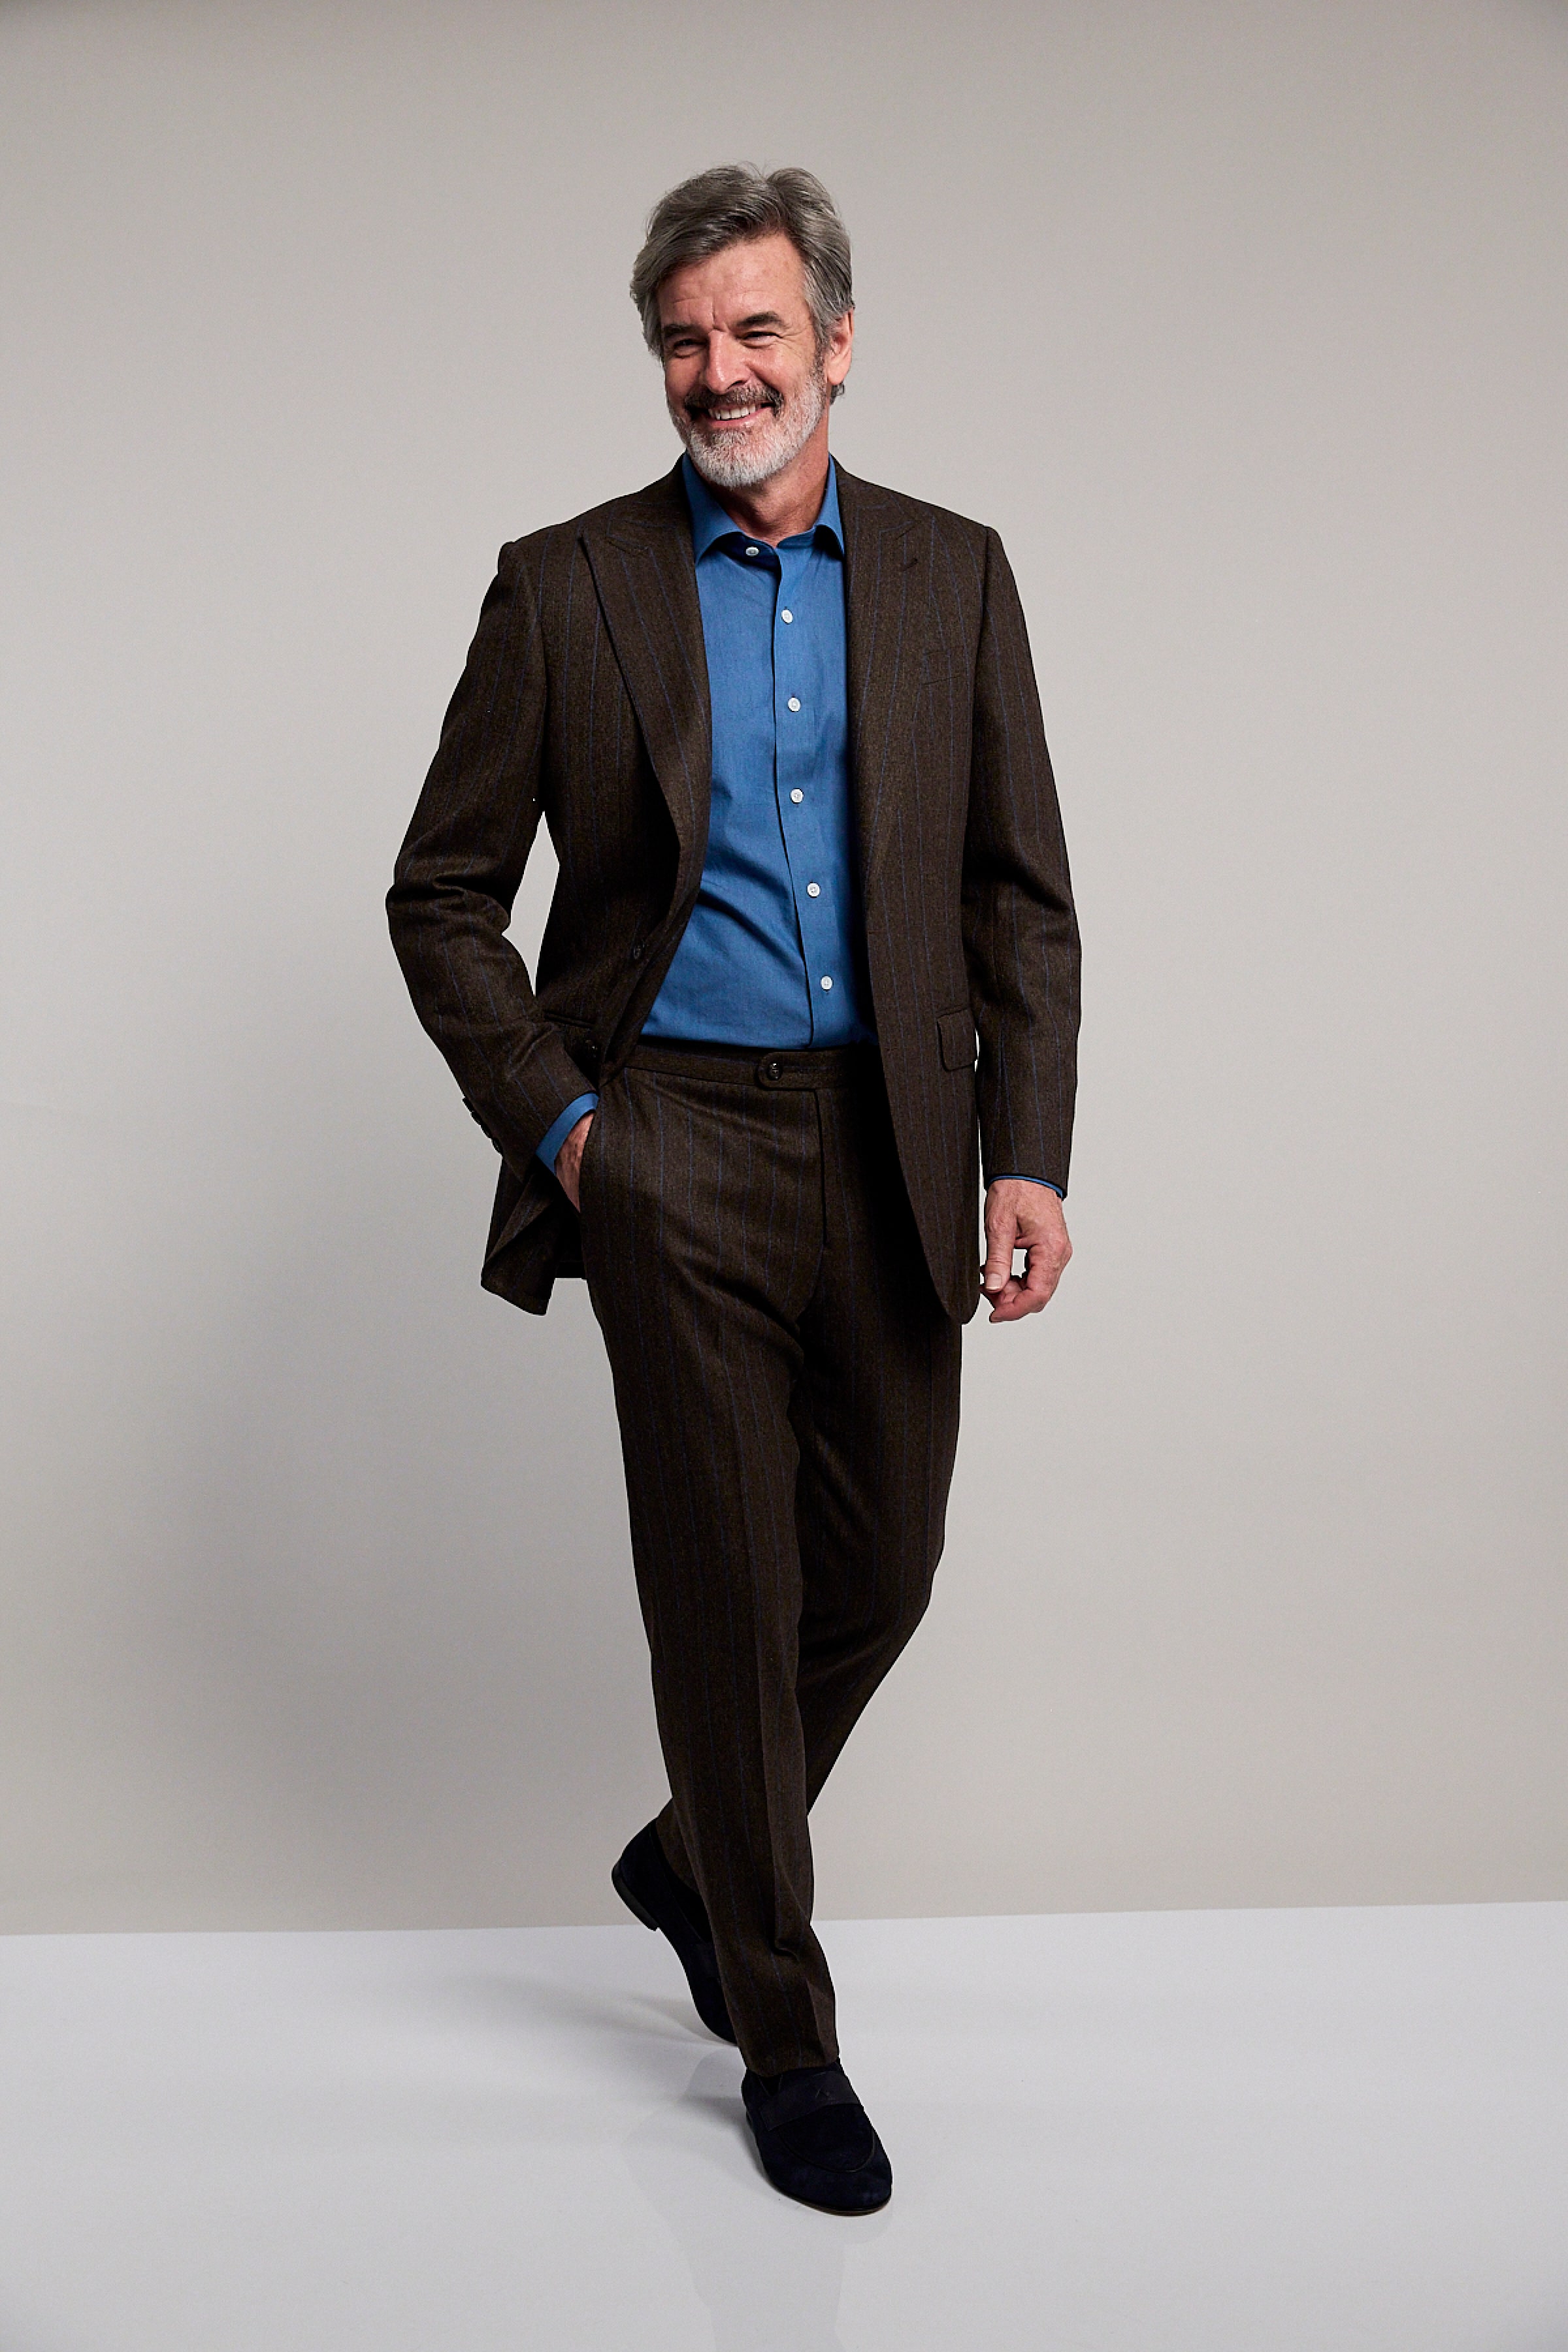 Wear Pinstripe Suit With Style – Flex Suits